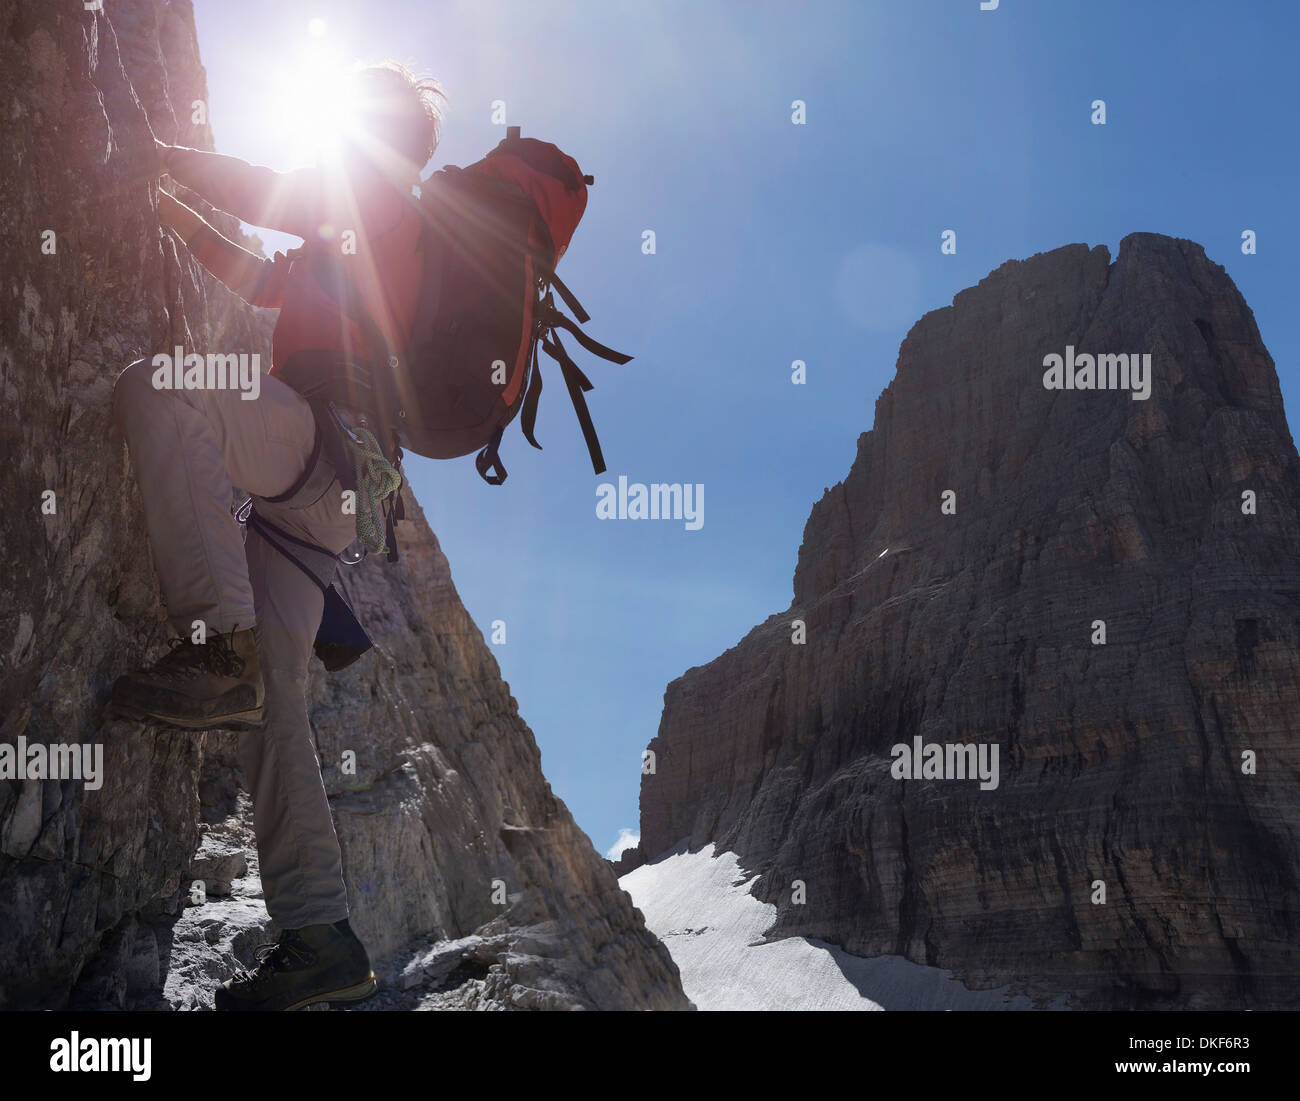 Bergsteiger auf Felswand, Brenta-Dolomiten, Italien Stockfoto